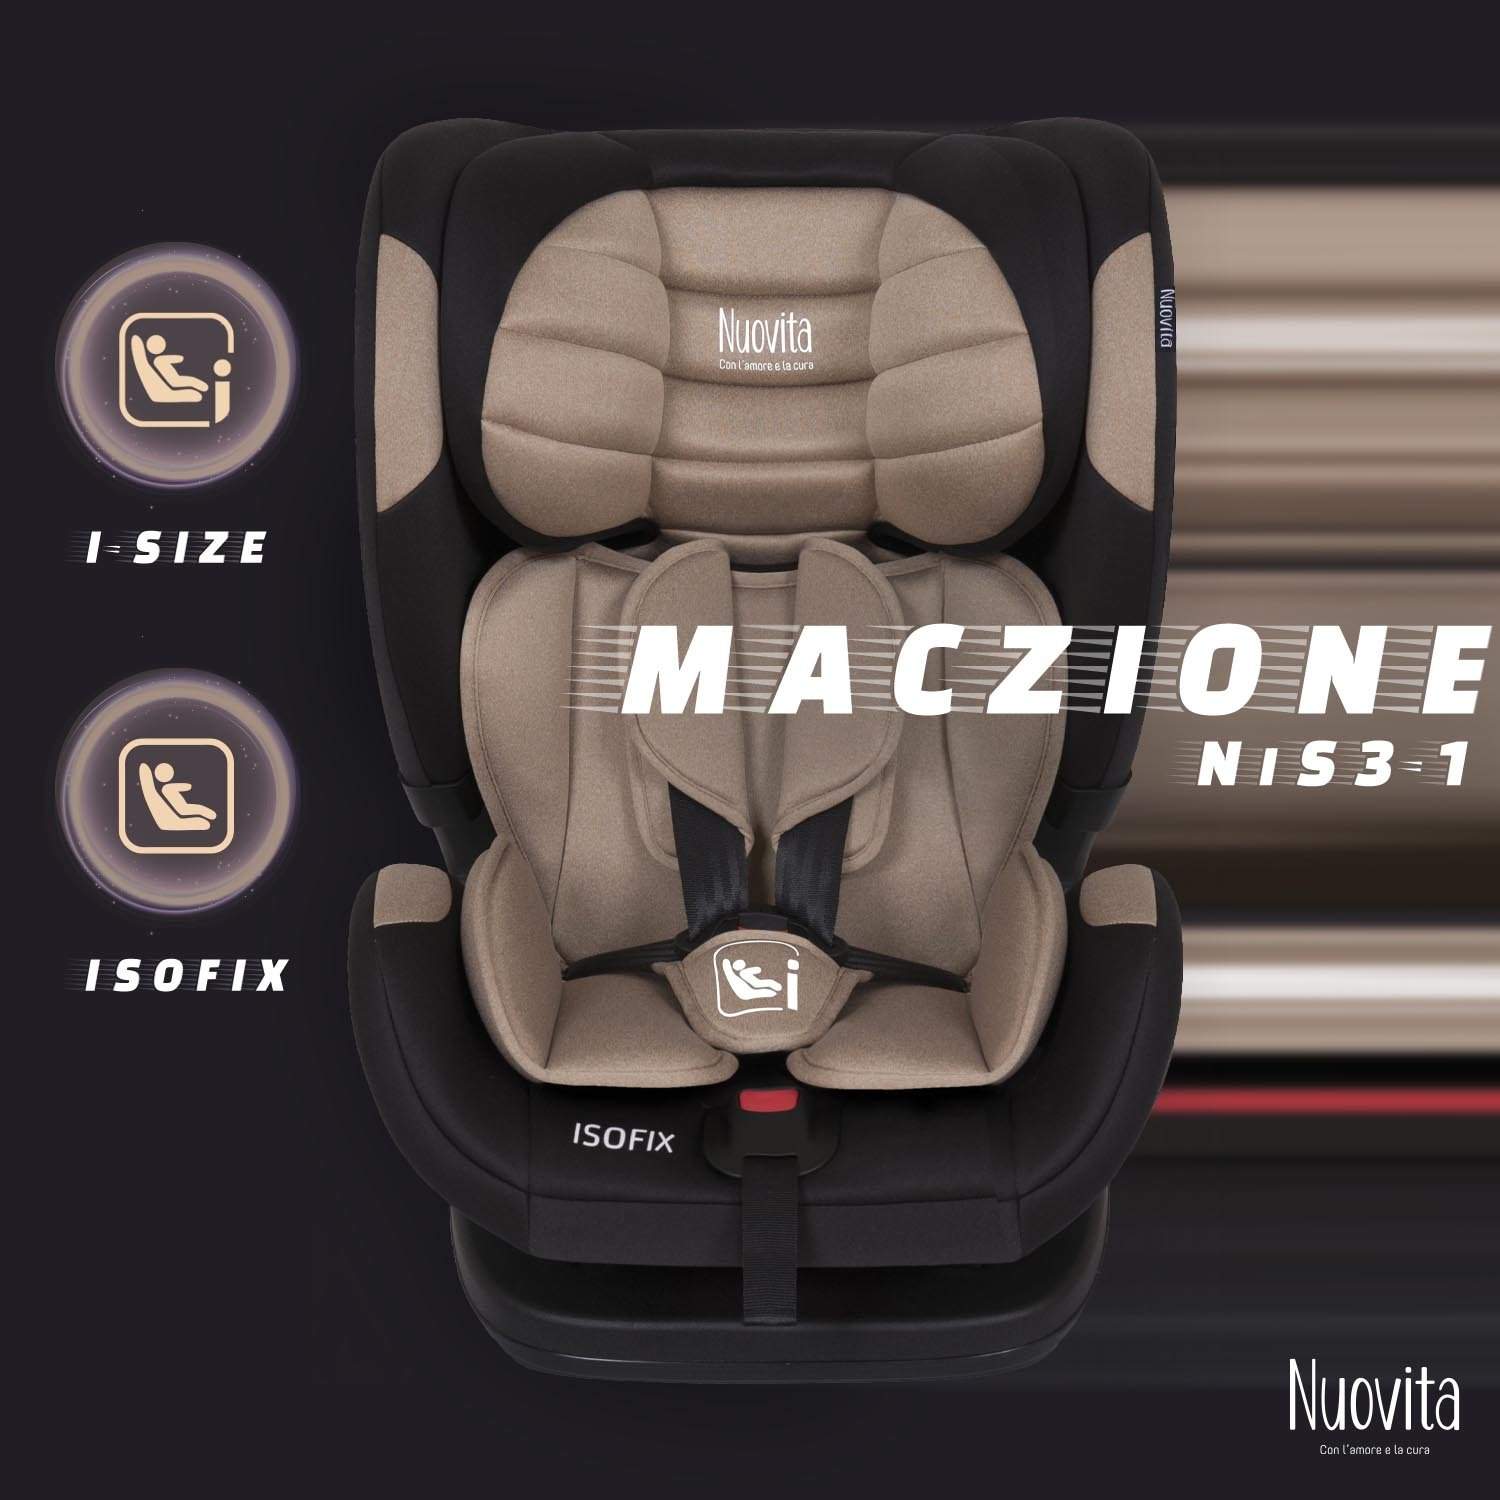 Купить детское автокресло Nuovita Maczione NiS3-1, Isofix, группа 1,2,3,9-36 кг (Бежевый), цены на Мегамаркет